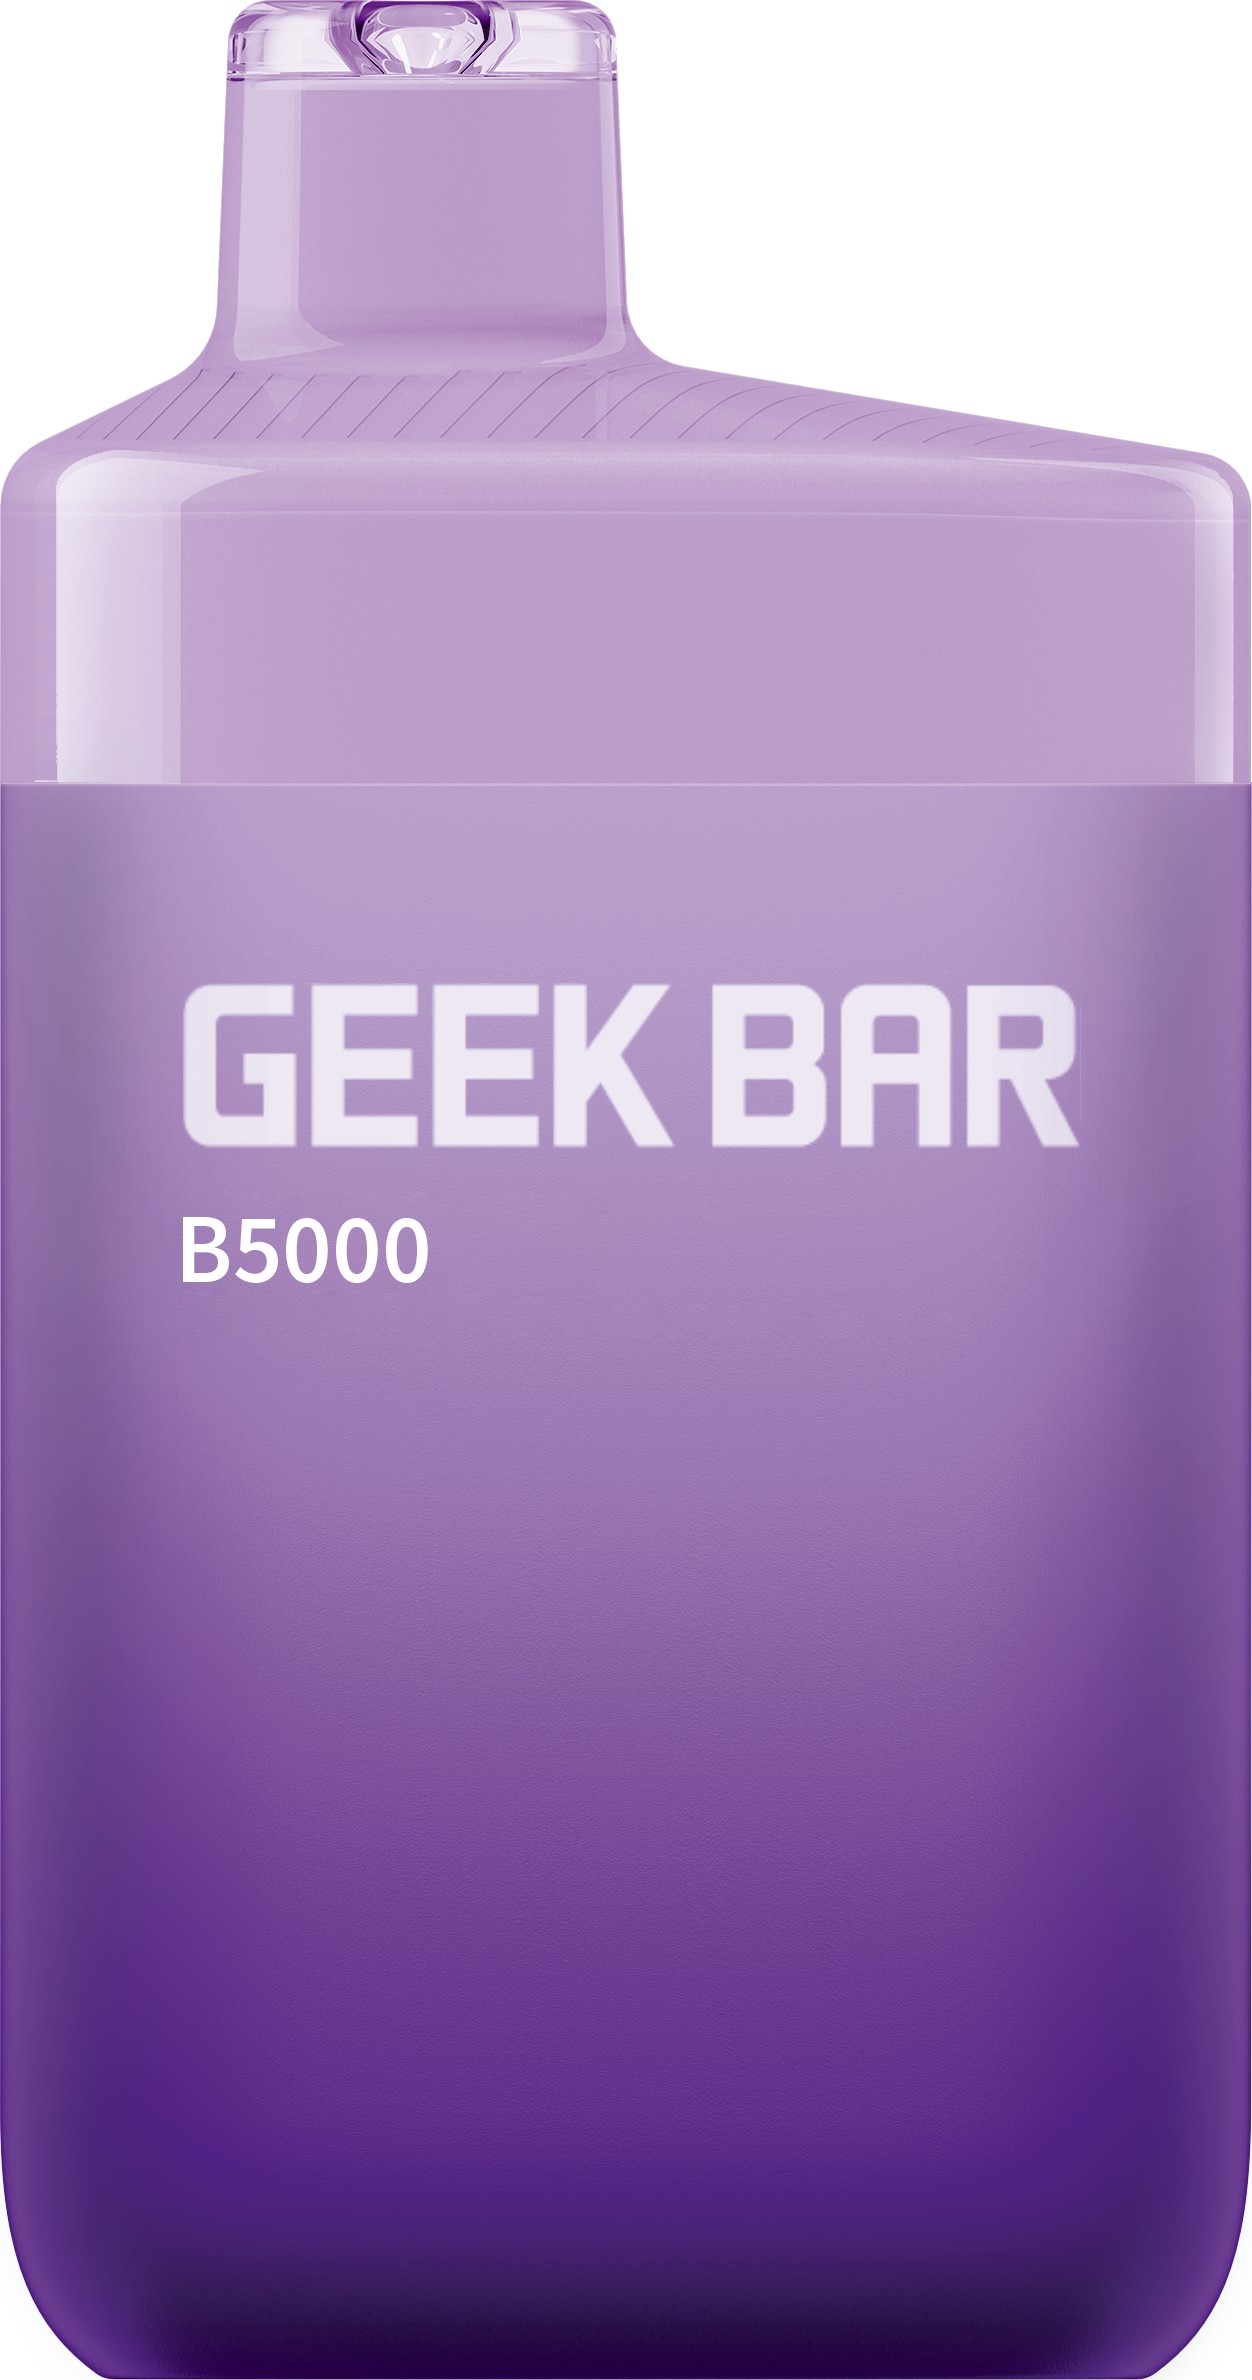 Geek Bar B5000 Disposable 0% NICOTINE FREE - Berry Trio Ice, geekbar